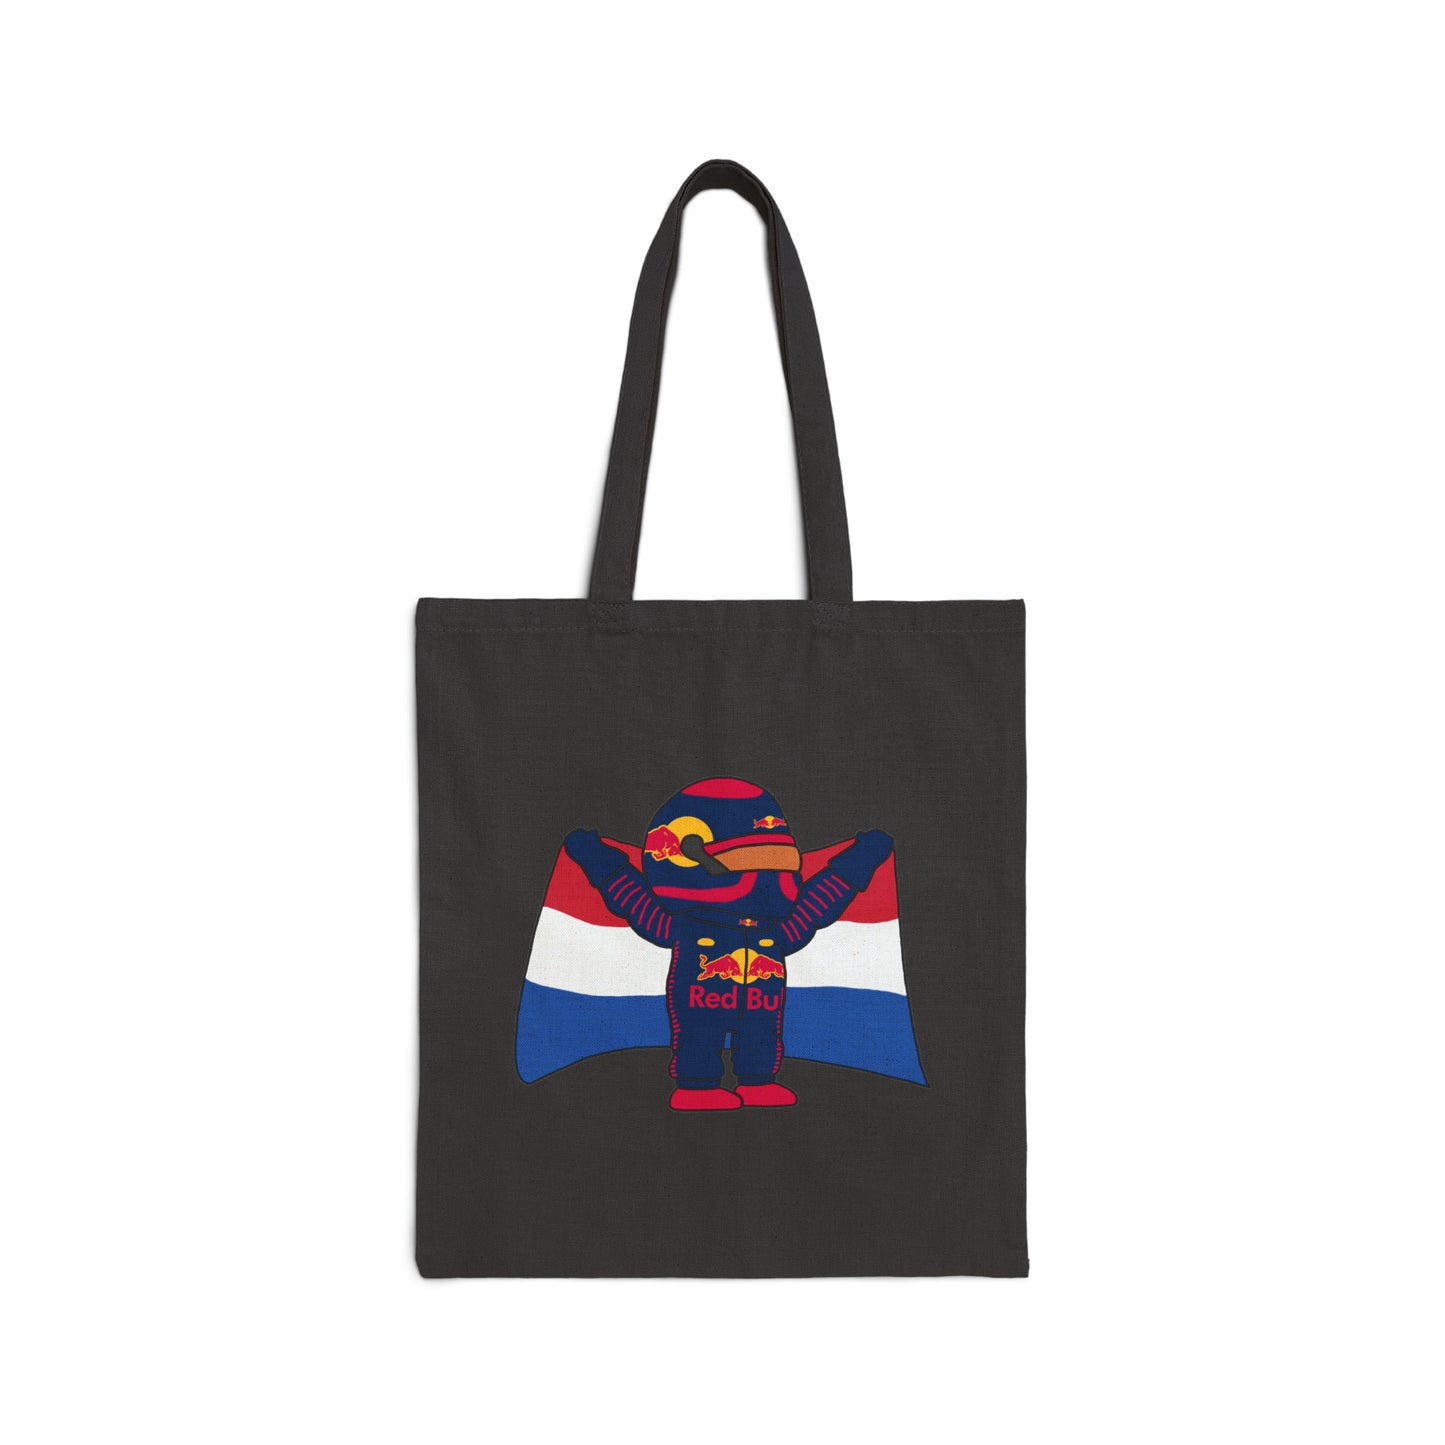 NeVerStappen Red Bull Formula 1 F1 Max Vertsappen Cotton Canvas Tote Bag Next Cult Brand